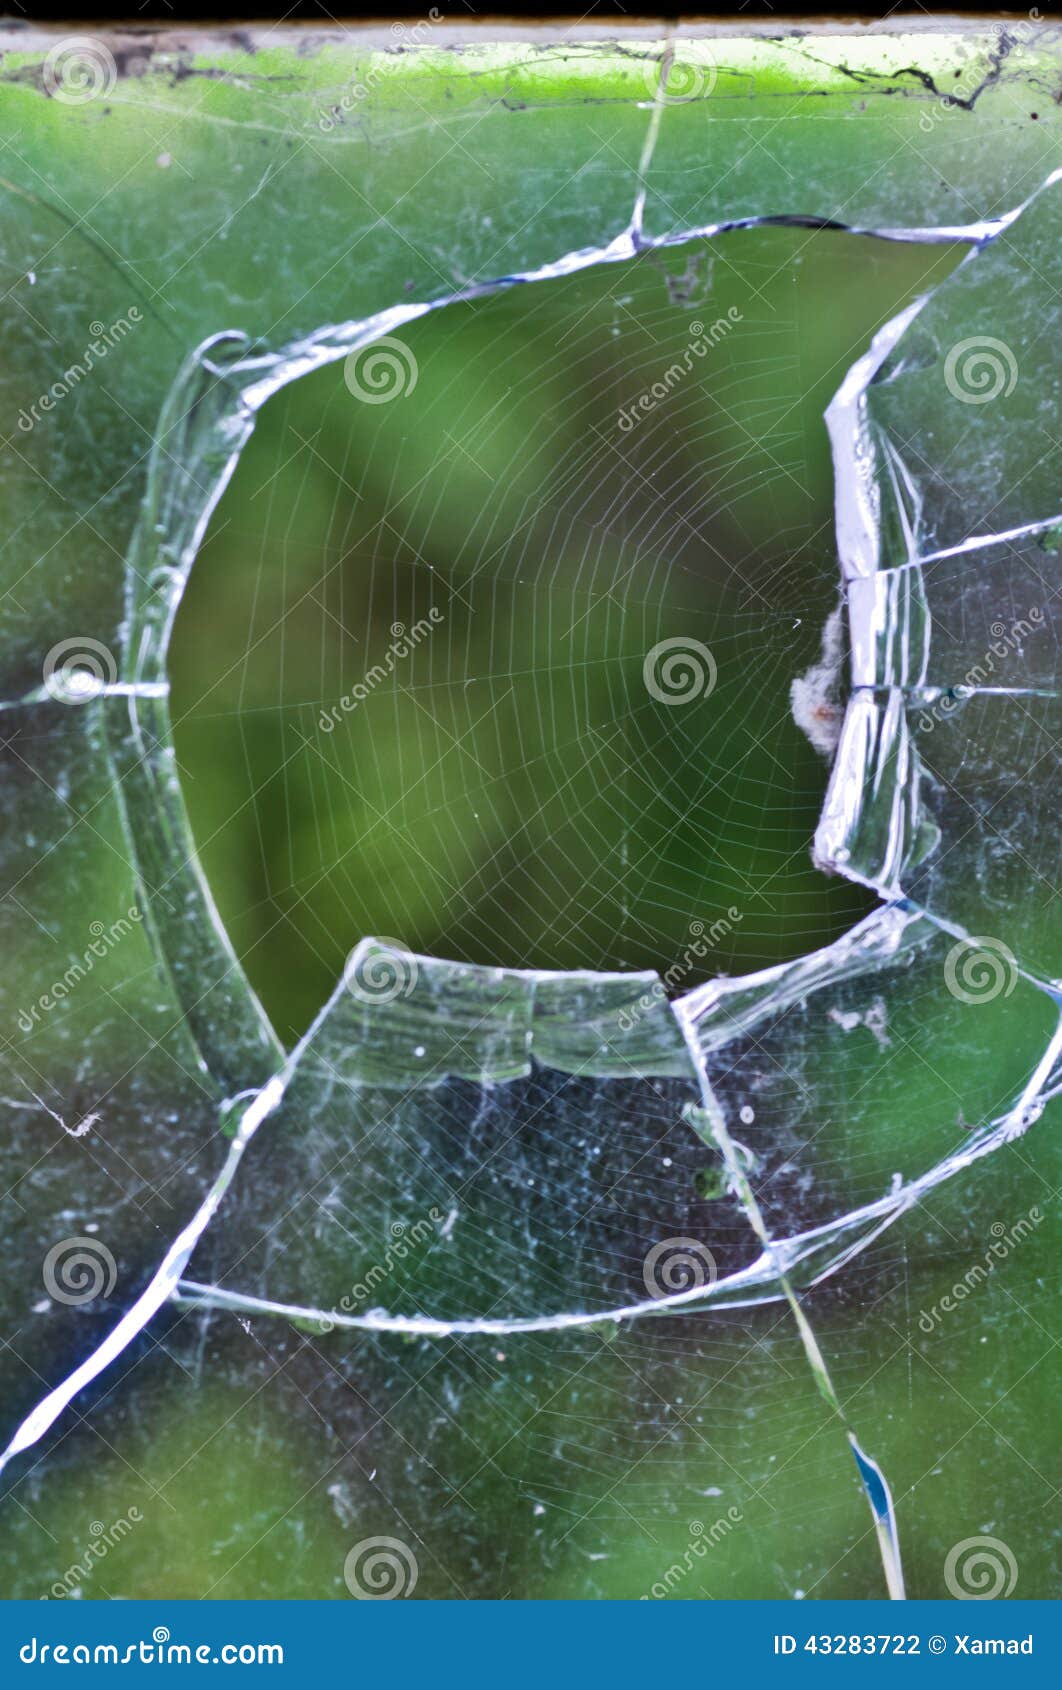 a web in a broken glass of a windows